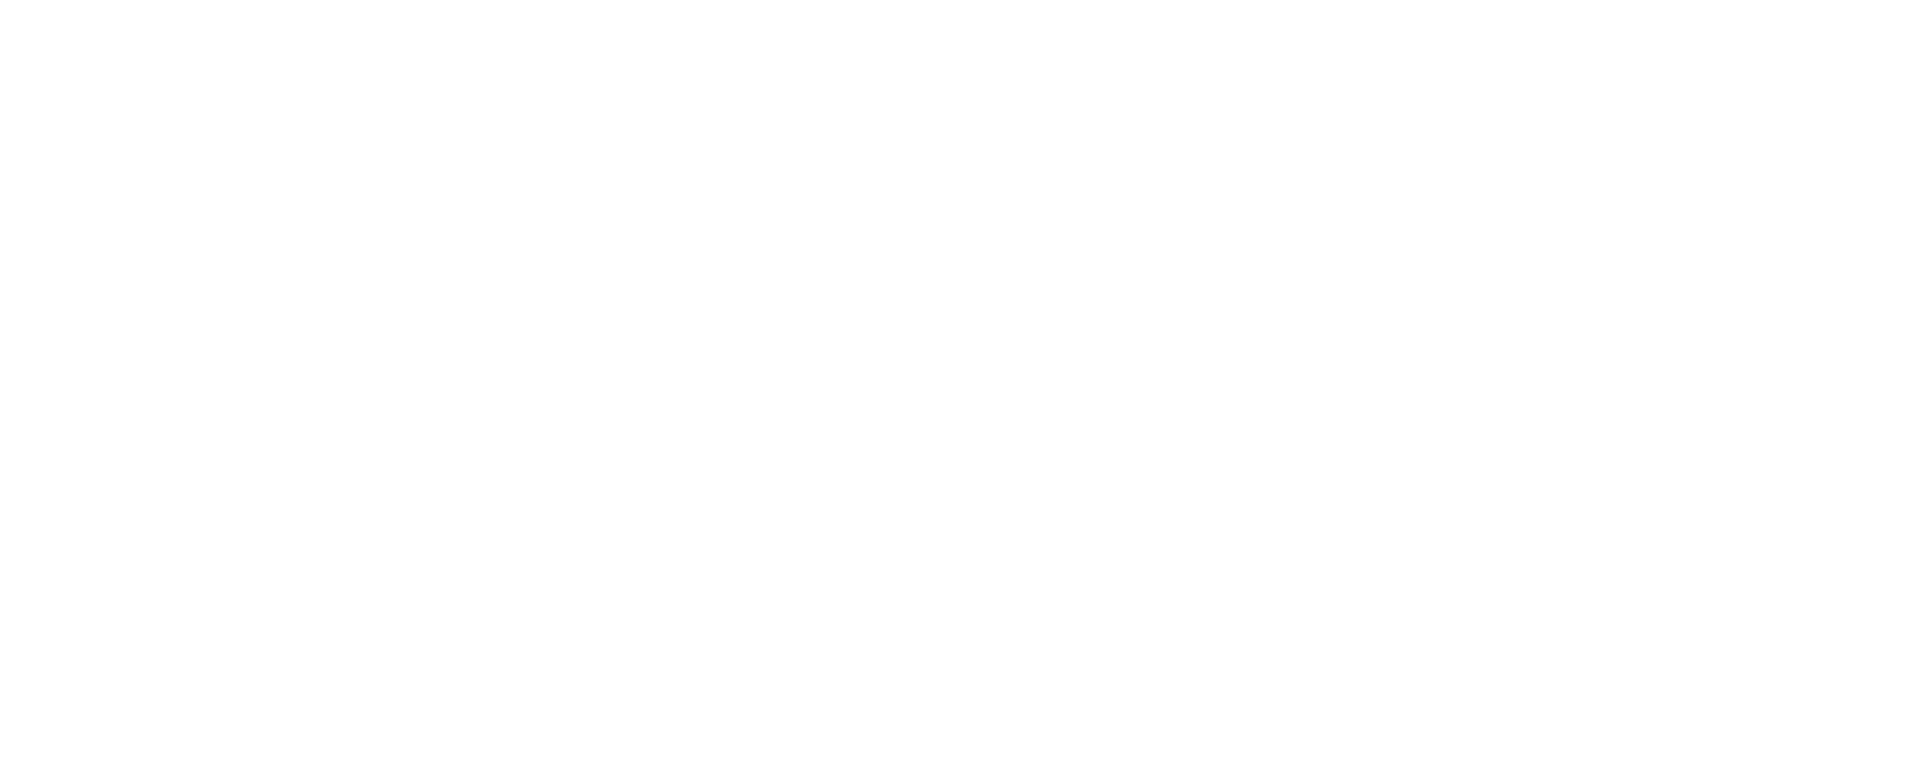 Miller Electric Logo - Welding Supplies Online - Welder Supply Store ...